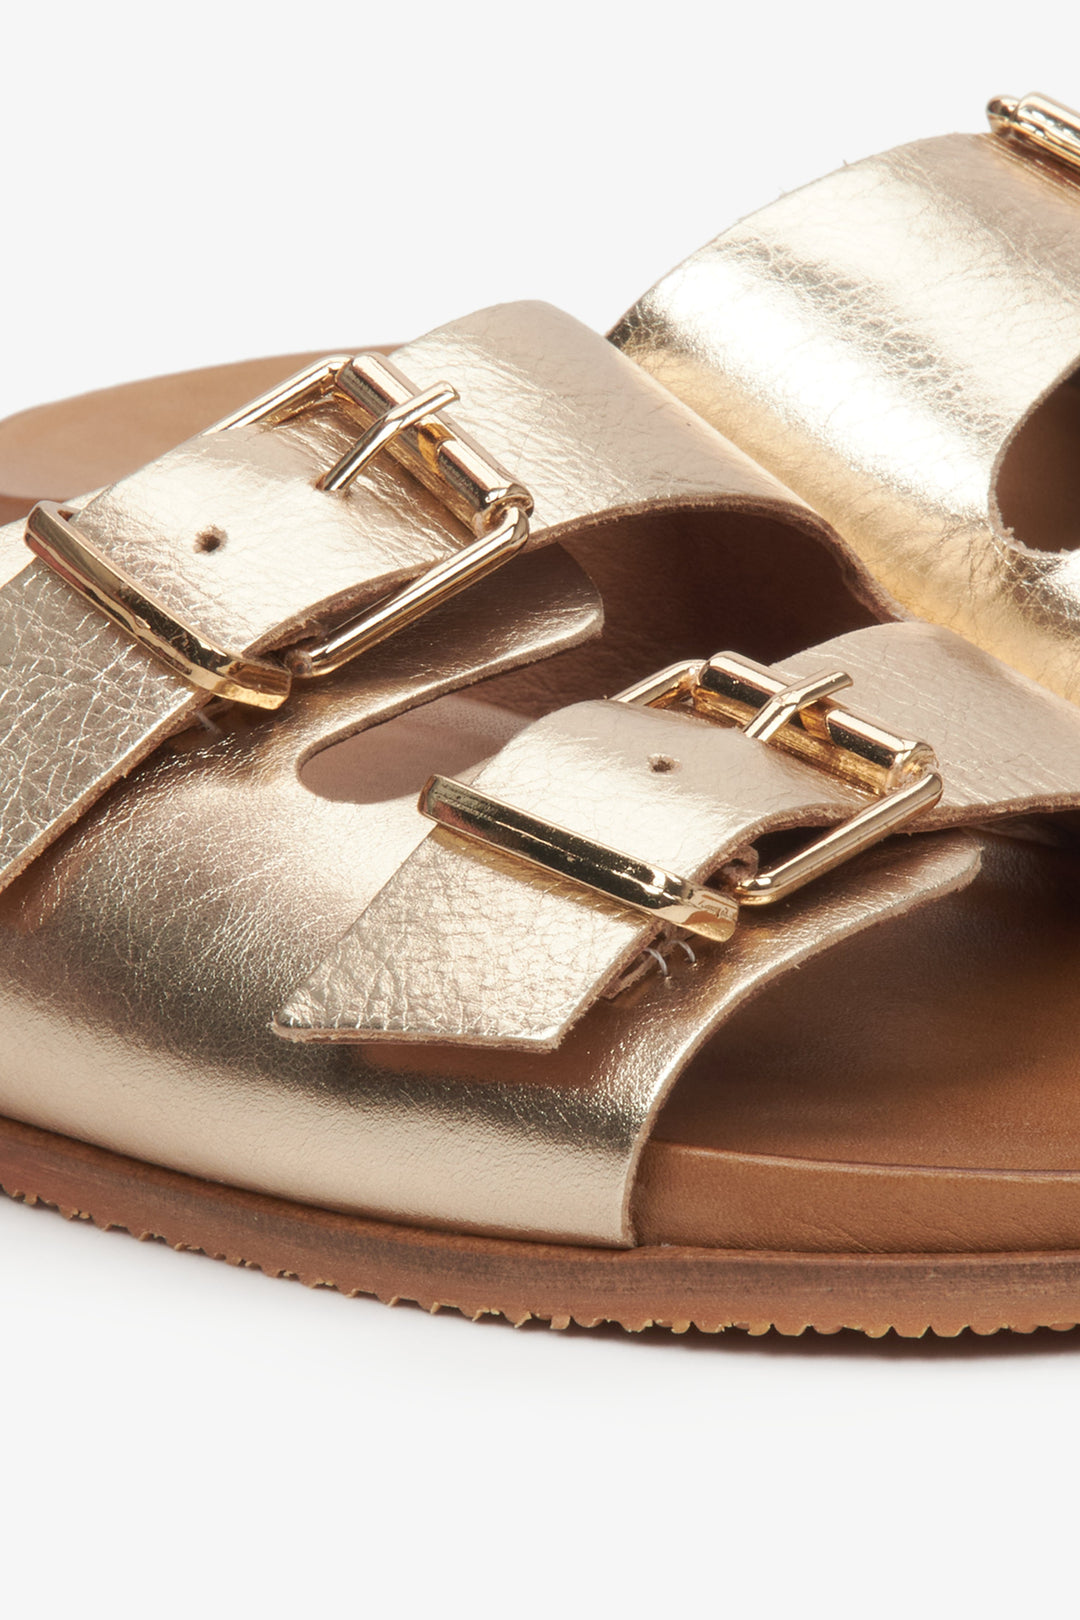 Women's slide sandals in gold Estro - close-up of details.